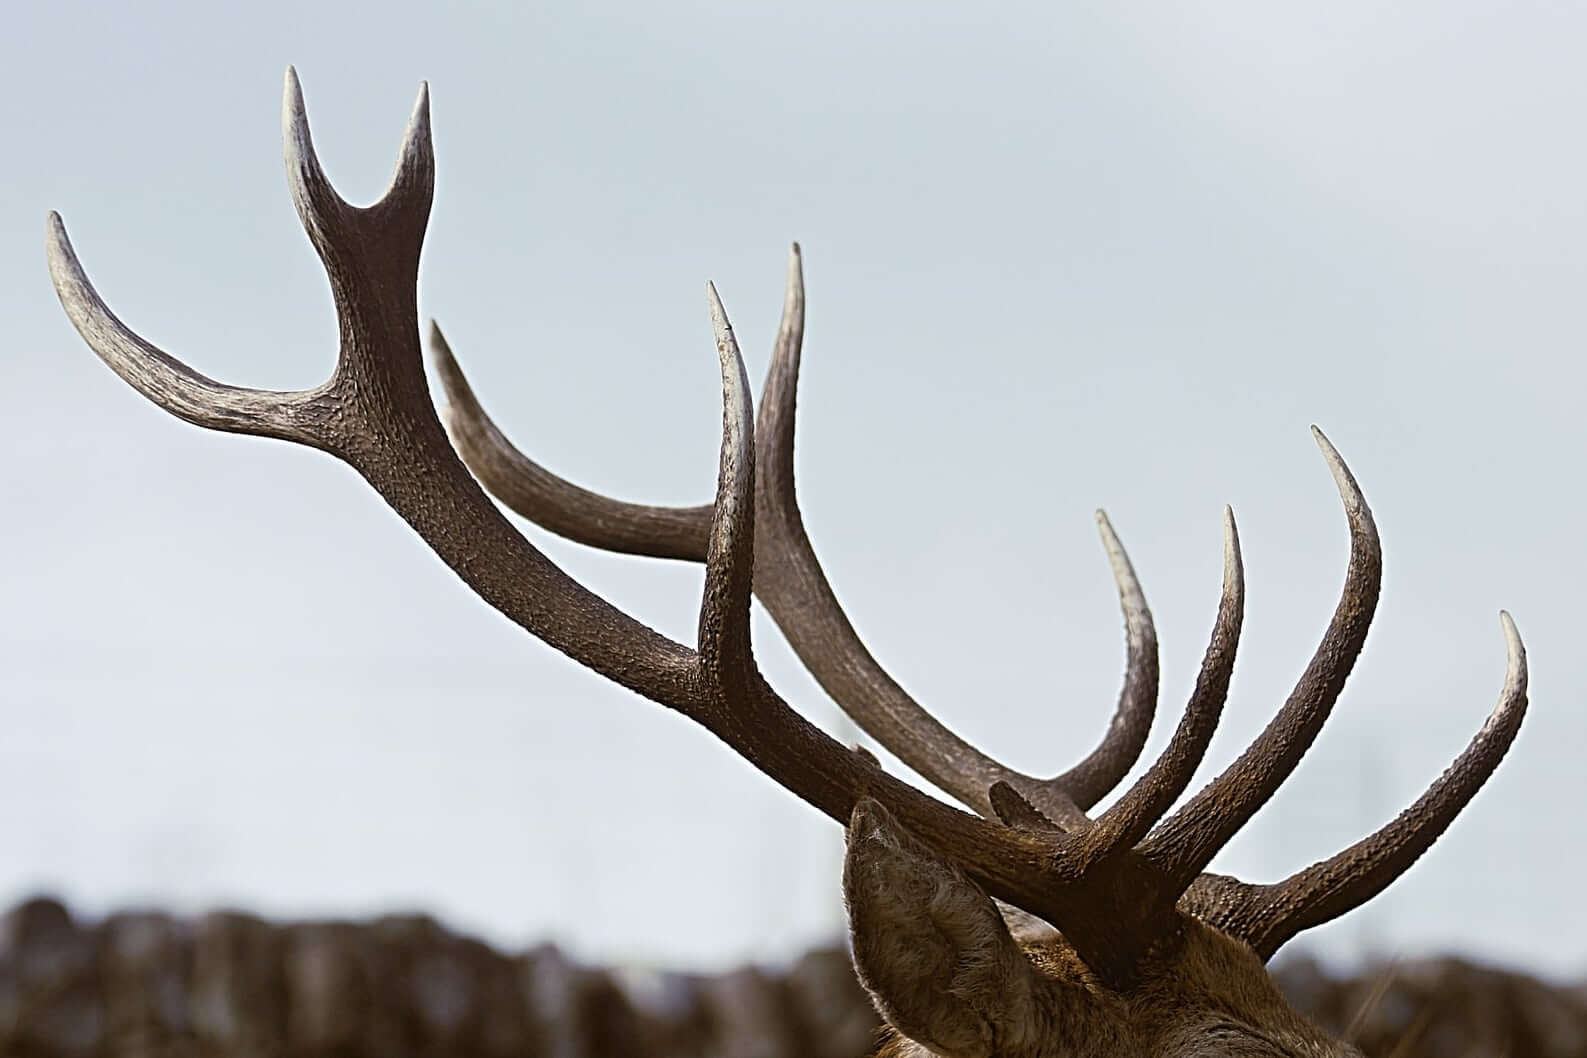 Photo of side view of deer antlers on deer, with deer's head cut out of bottom of frame.